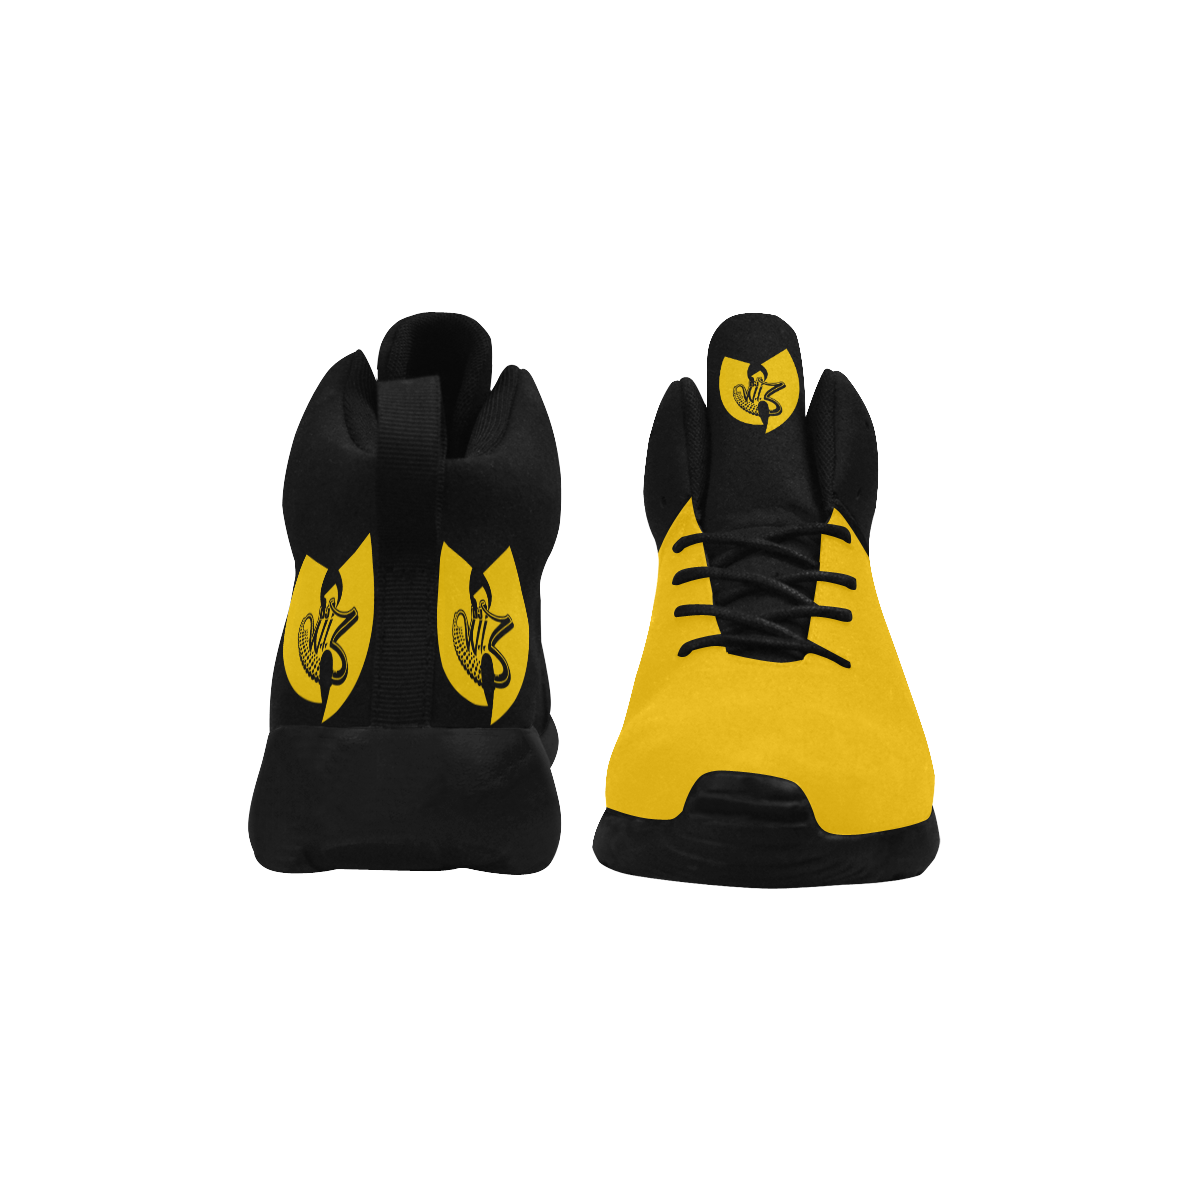 Wu-Tang's DJ W.I.Z Yellow On Black Men's Chukka Training Shoes Men's Chukka Training Shoes (Model 57502)